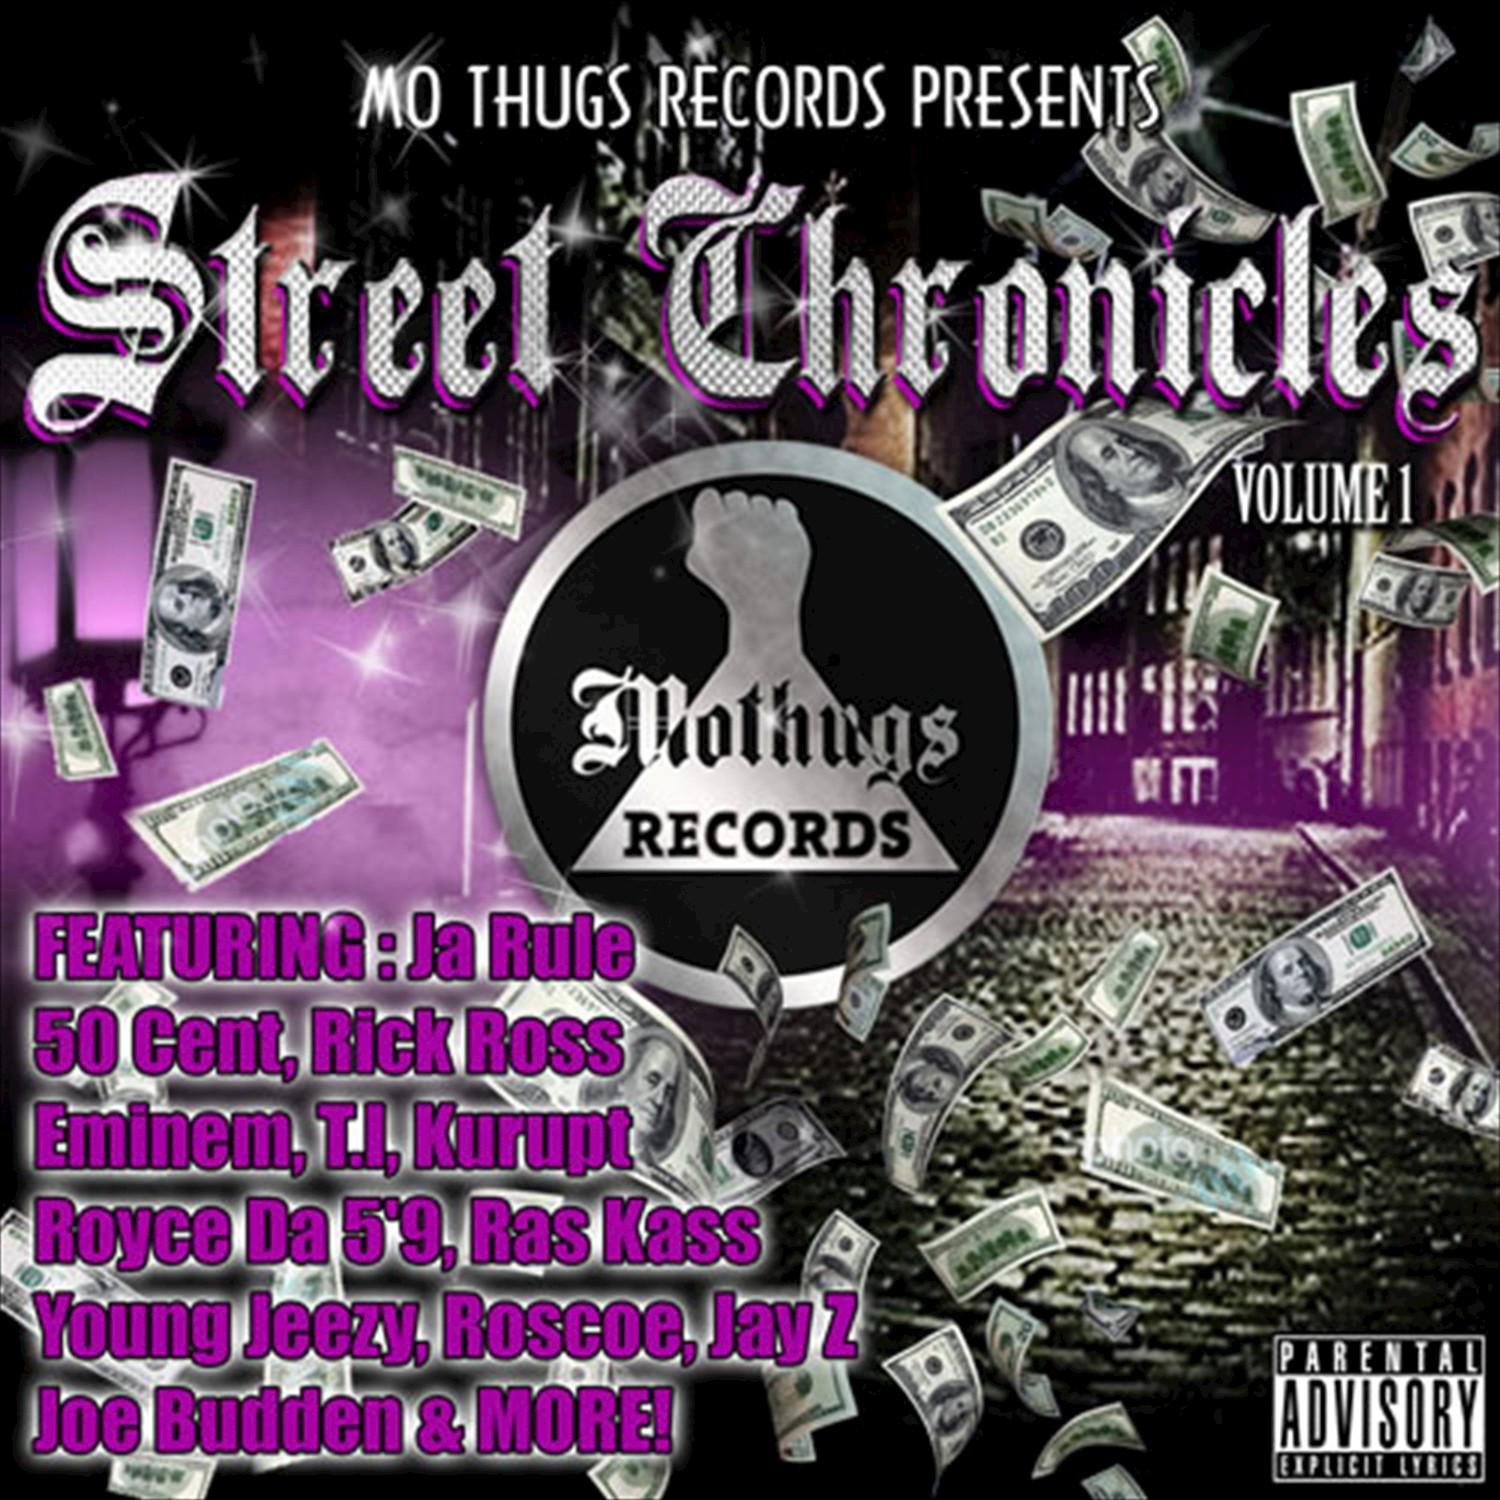 Mo Thugs Presents Street Chronicles, Vol. 1